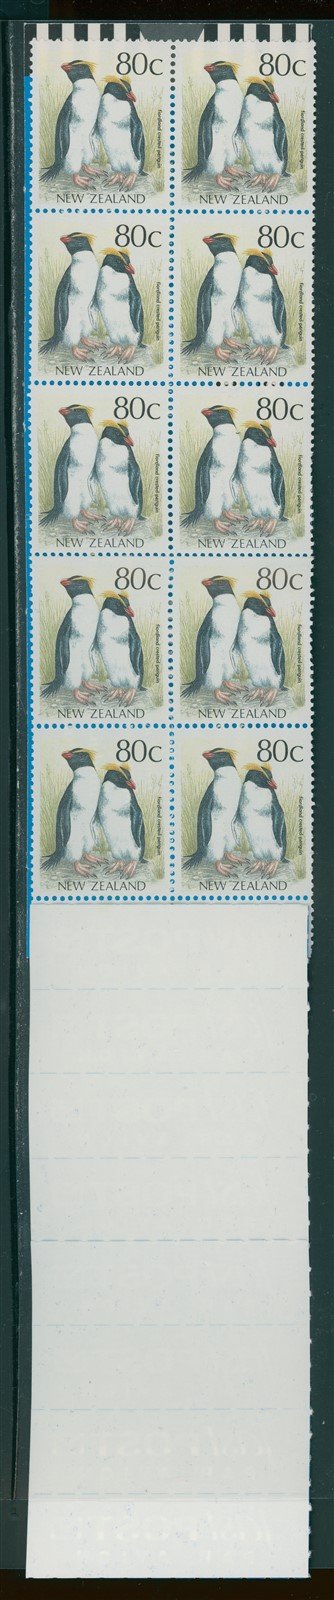 New Zealand Scott #927 MNH BOOKLET PANE of 10 Crested Penguin 80c CV$11+